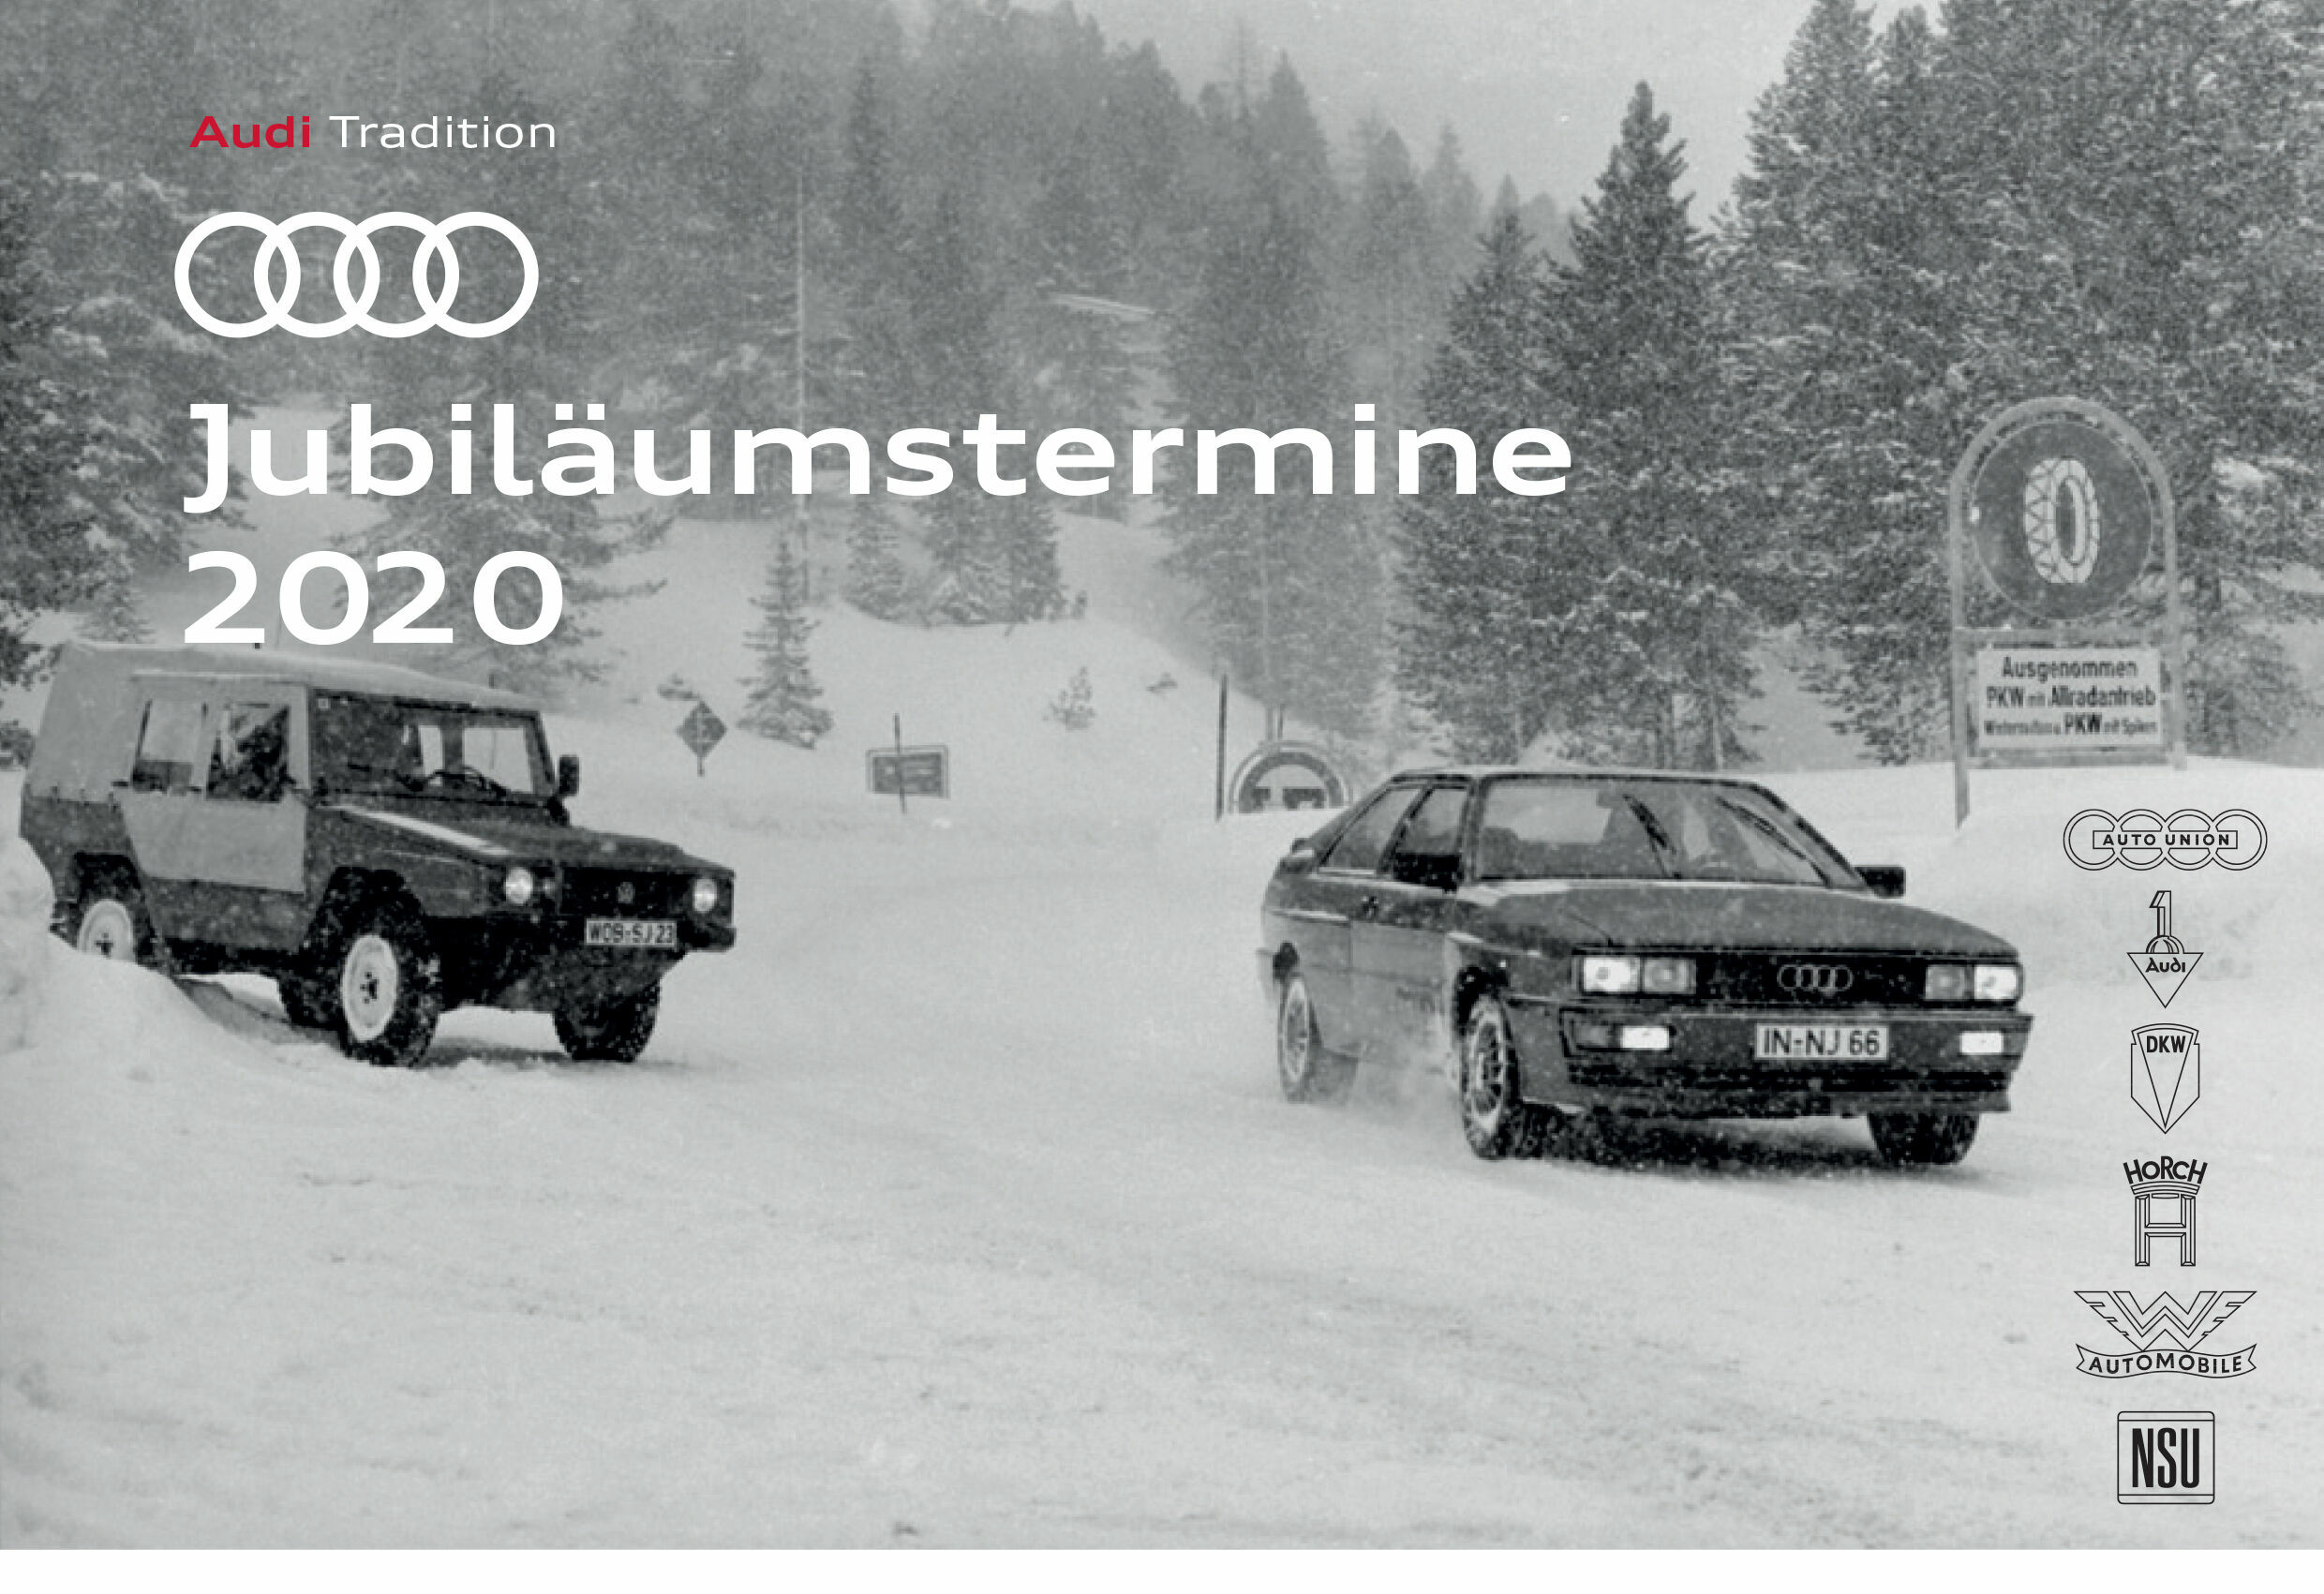 Audi Jubiläumstermine 2020